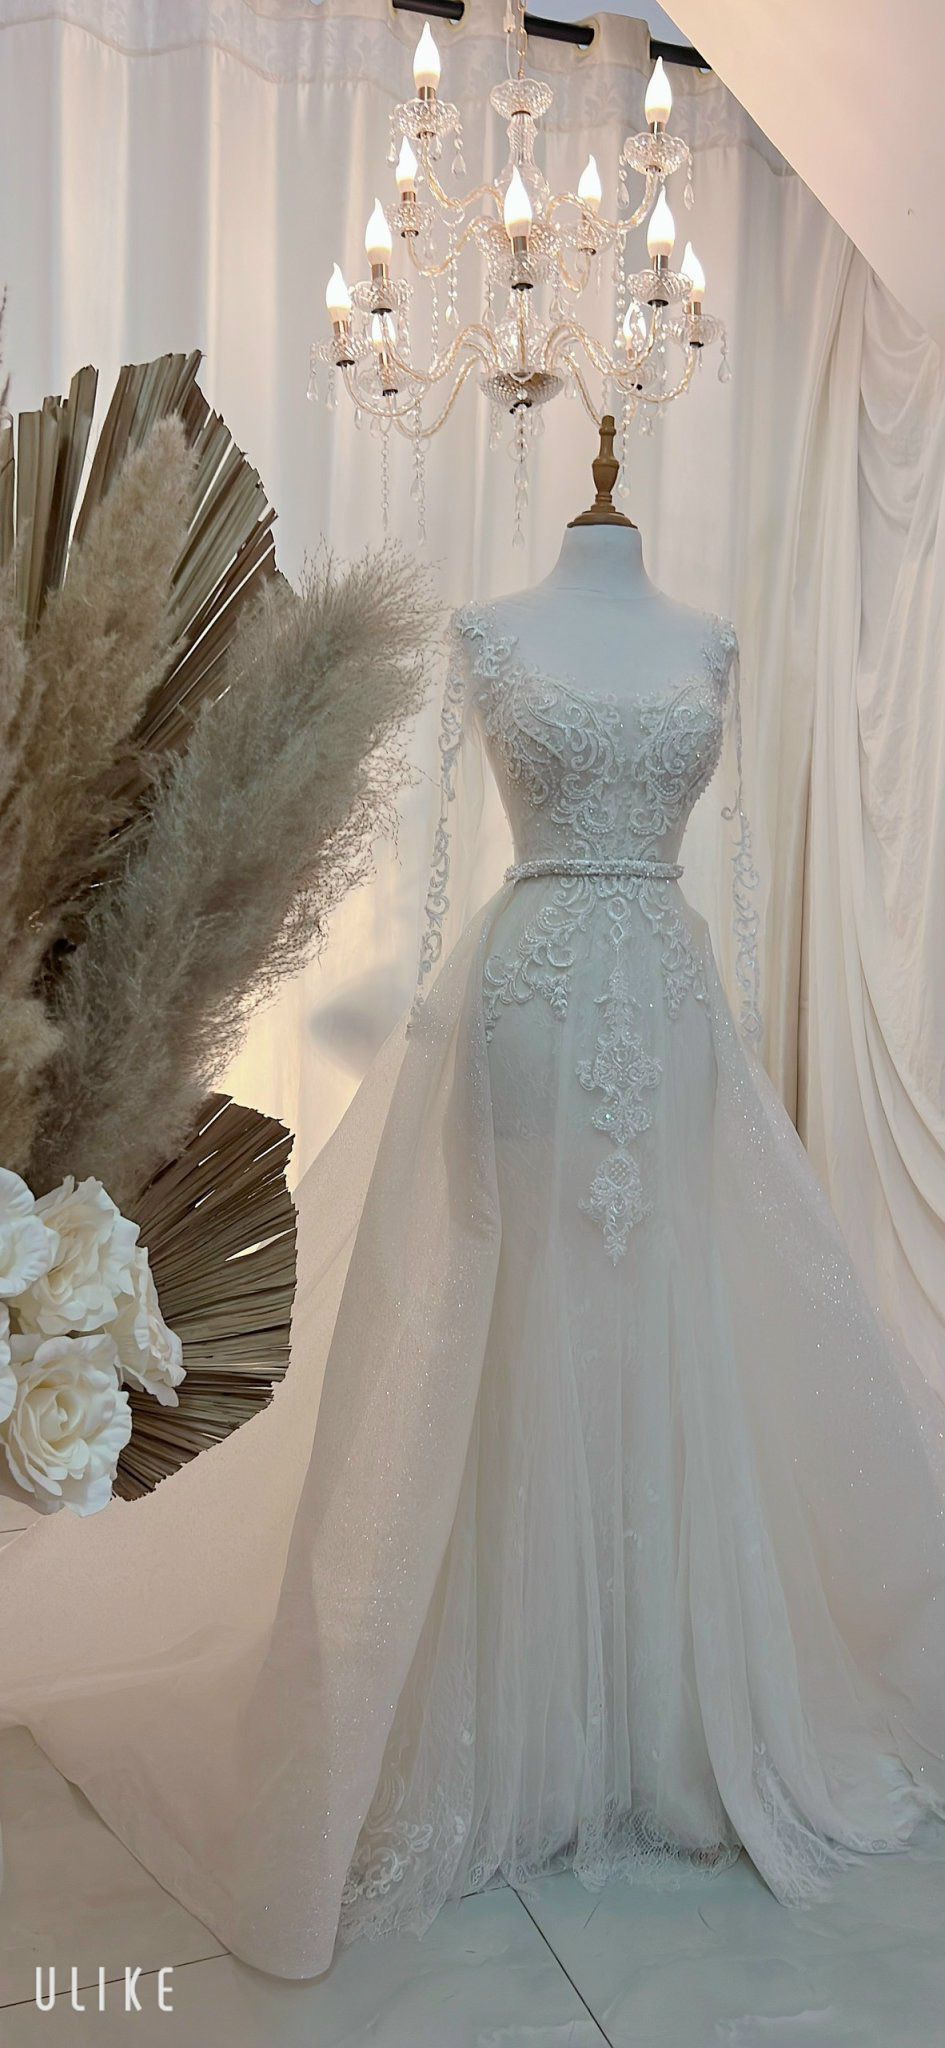 Wedding Dress 2in1